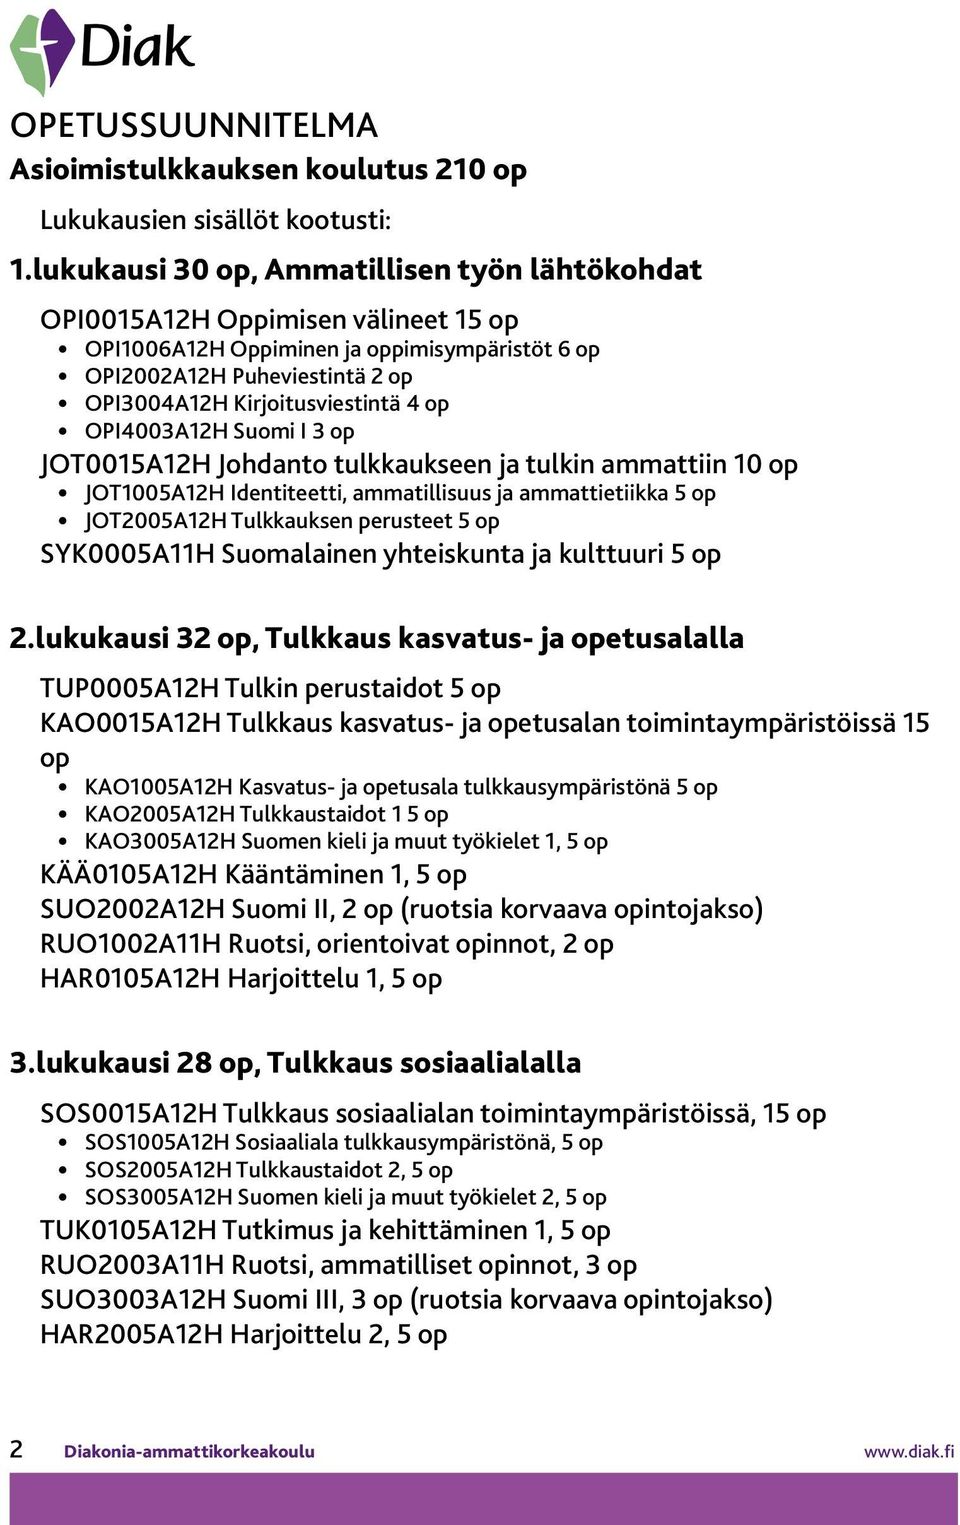 OPI4003A12H Suomi I 3 op JOT0015A12H Johdanto tulkkaukseen ja tulkin ammattiin 10 op JOT1005A12H Identiteetti, ammatillisuus ja ammattietiikka 5 op JOT2005A12H Tulkkauksen perusteet 5 op SYK0005A11H